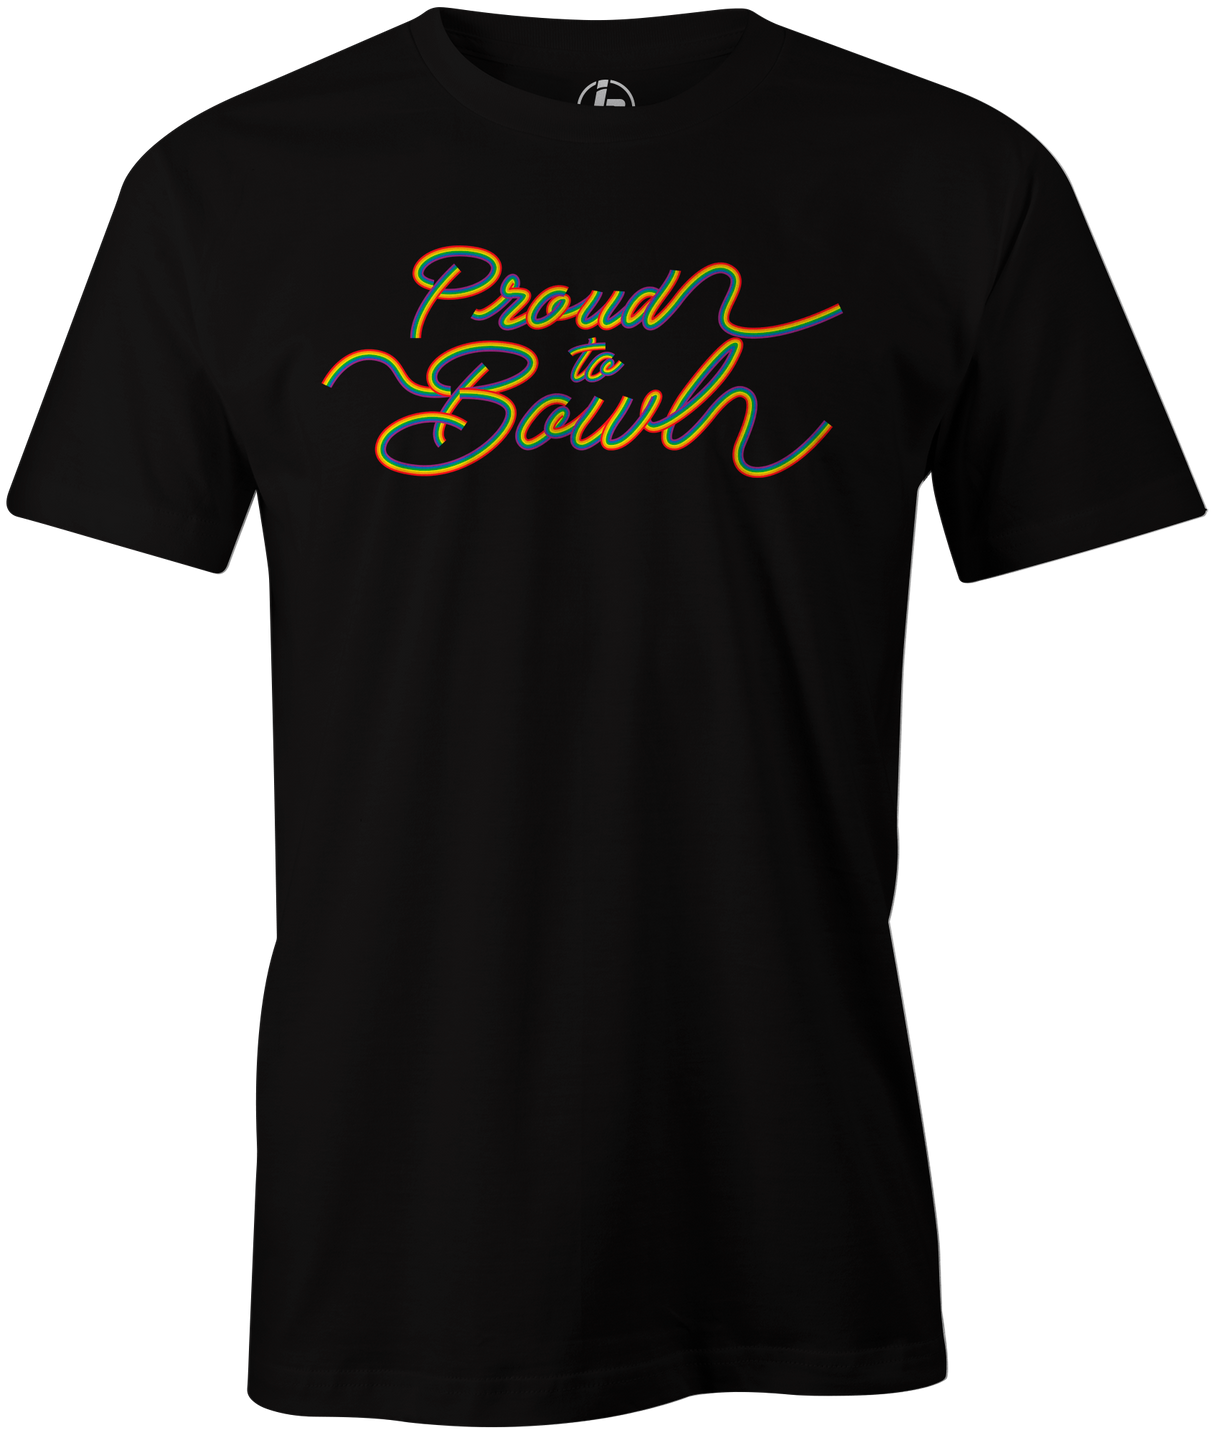 Proud Bowler Men's T-Shirt, Black, pride, tee, tee shirt, tee-shirt, tshirt